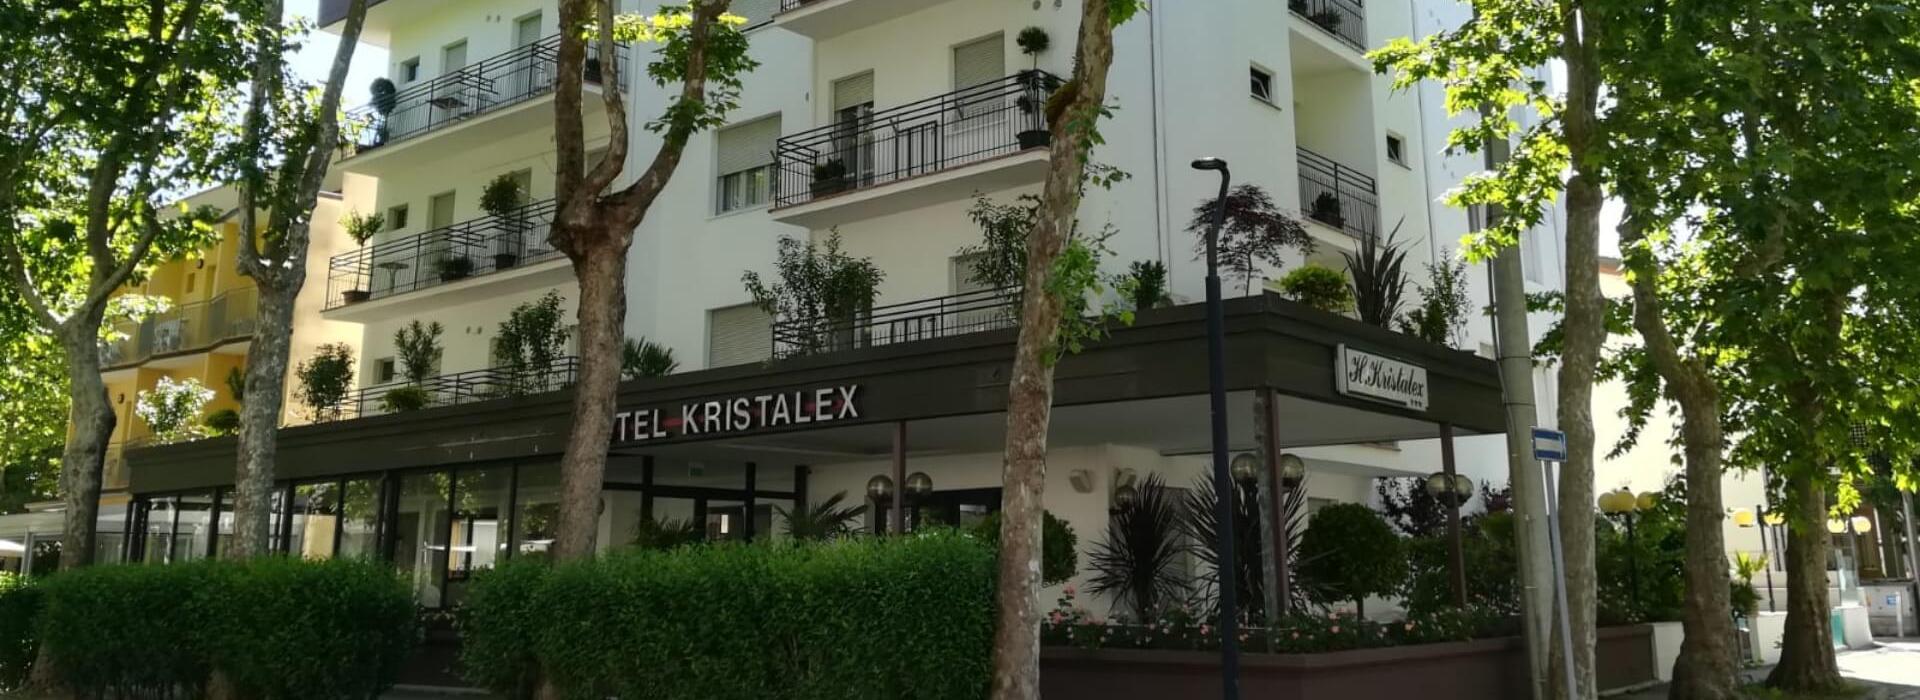 hotelkristalex fr long-week-end-printemps-cesenatico-pet-friendly 015